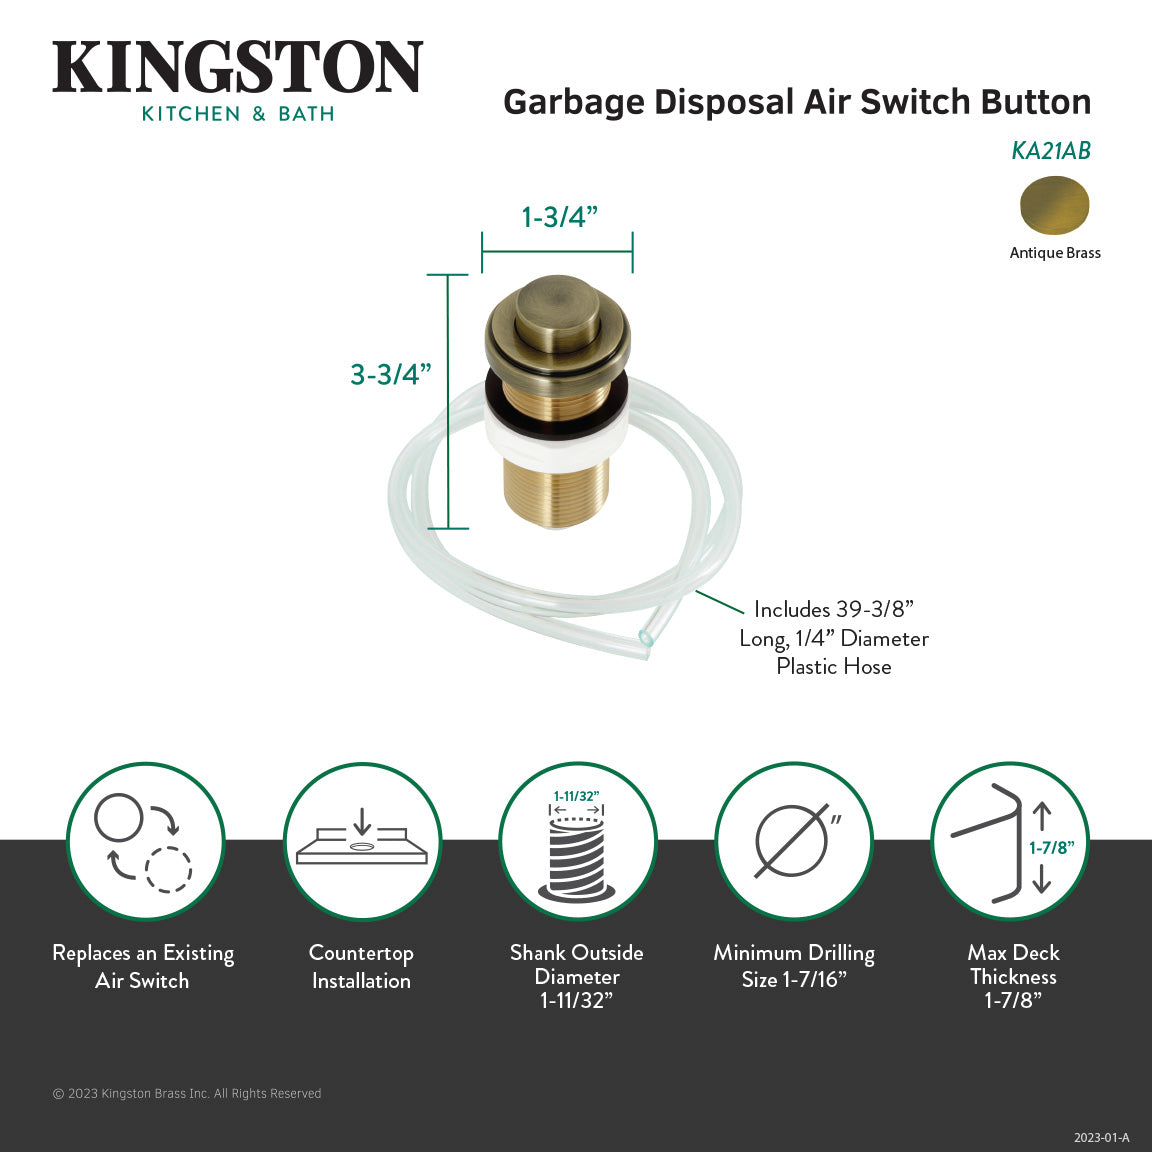 Trimscape KA21AB Garbage Disposal Air Switch Button, Antique Brass